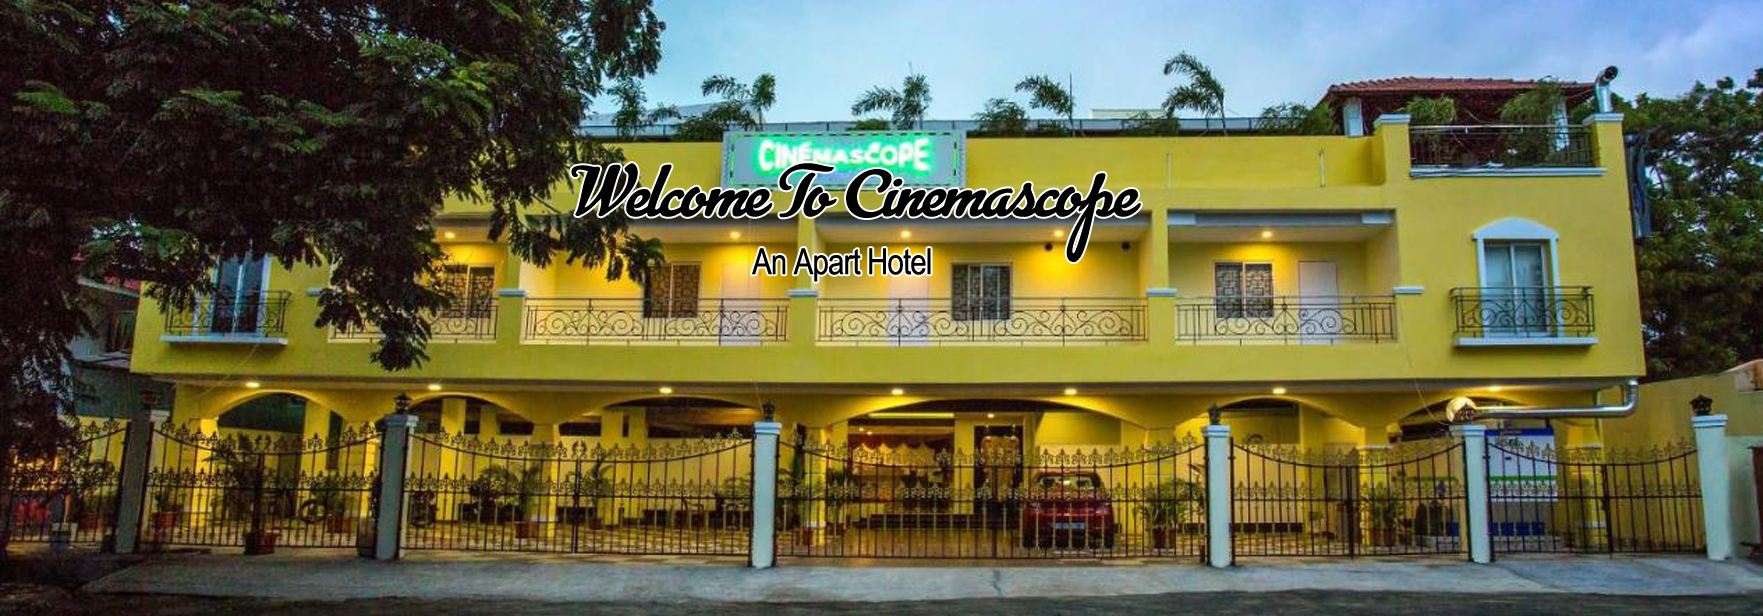 Cinemascope - An Apart Hotel